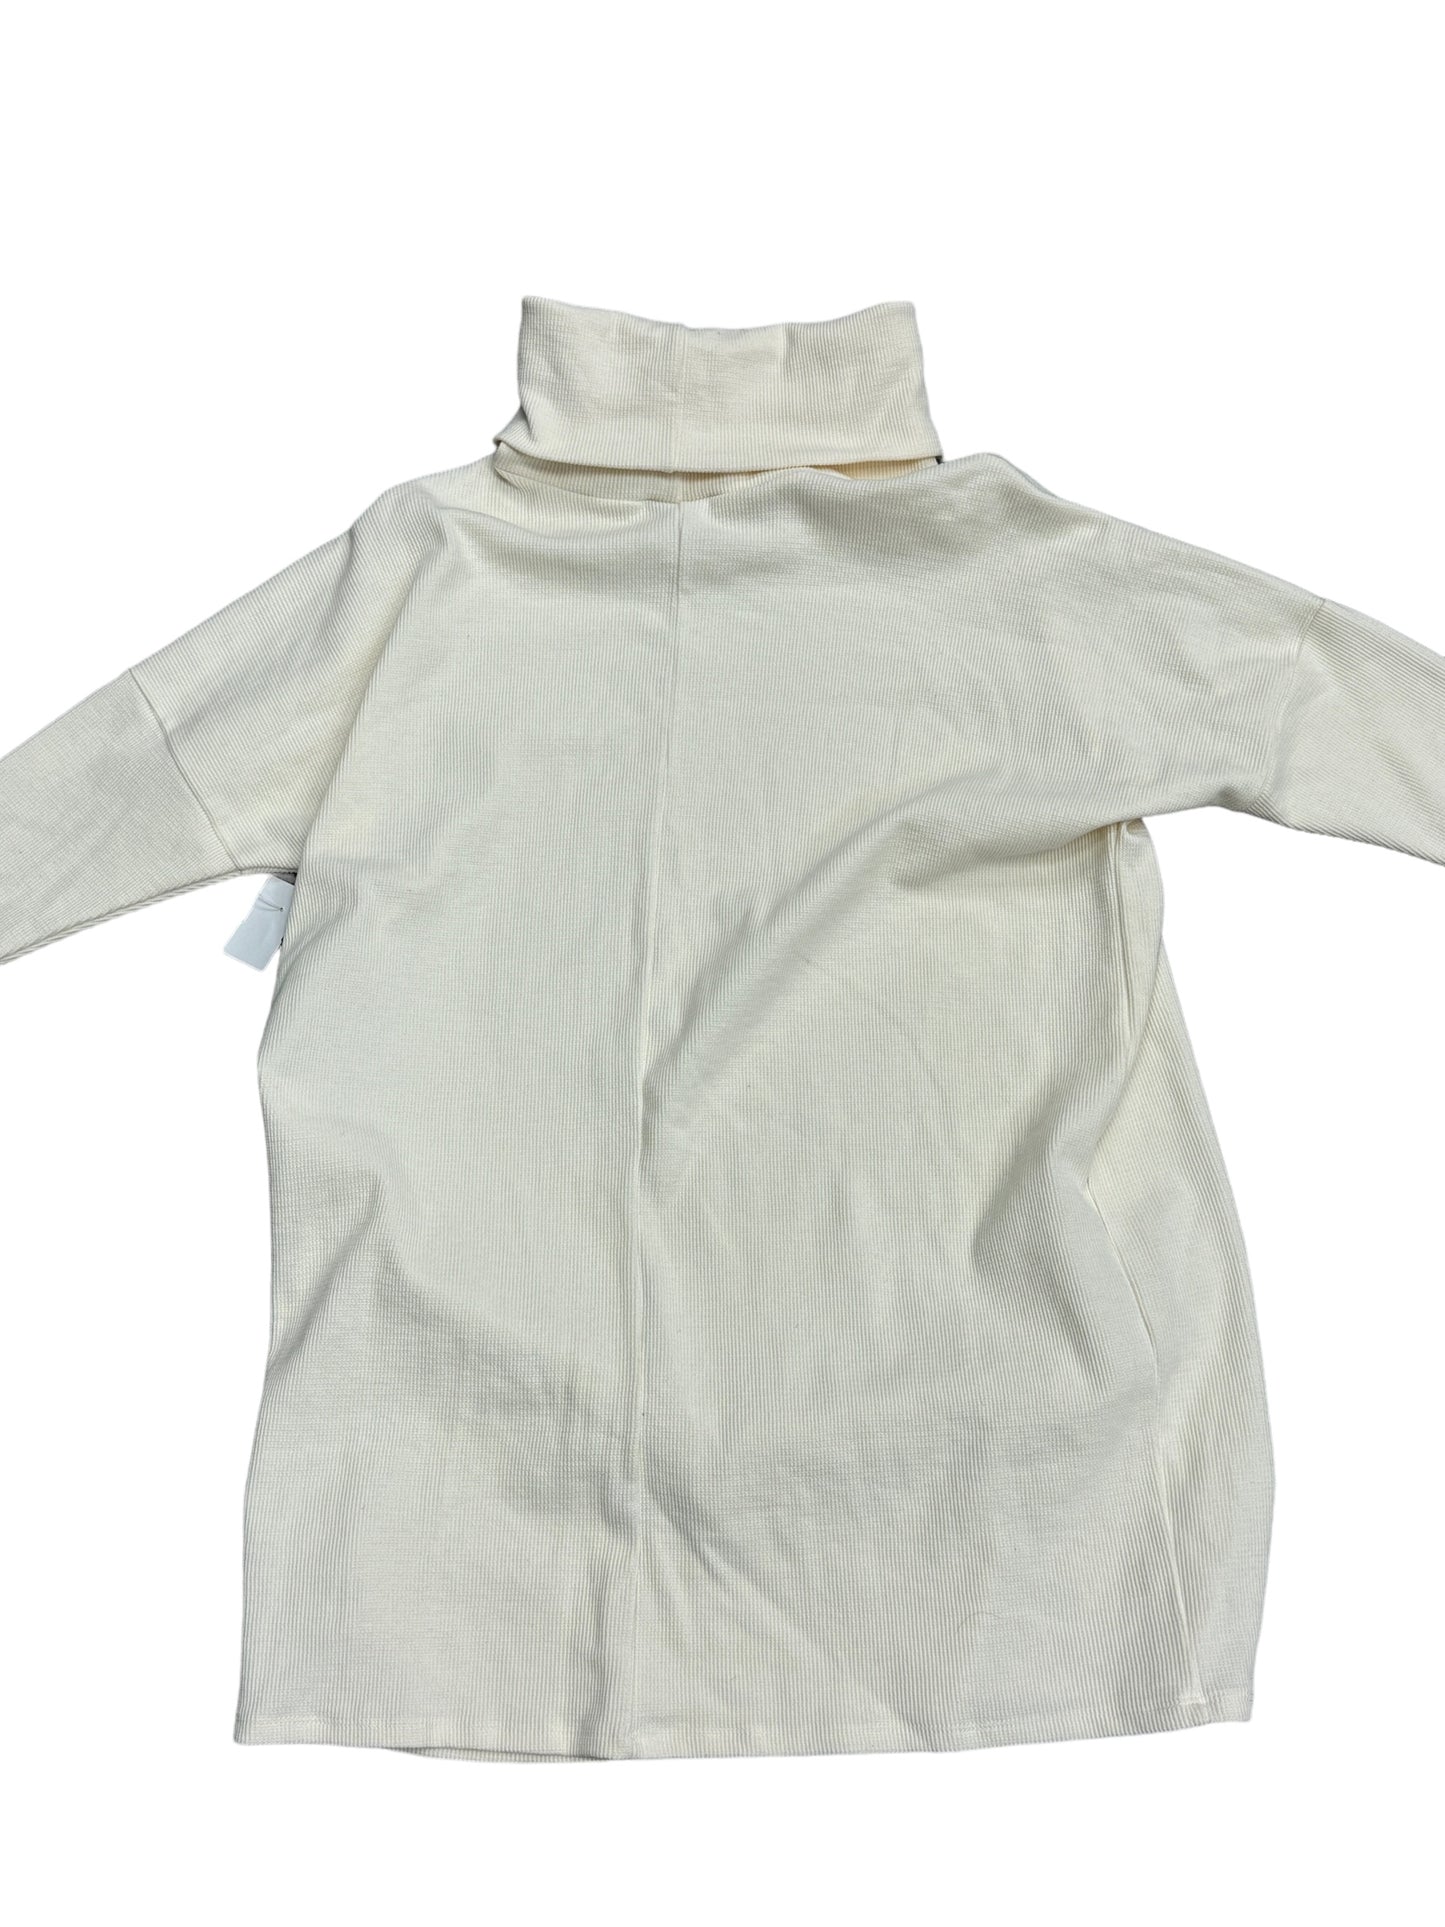 Tunic Long Sleeve By Lulus  Size: 10